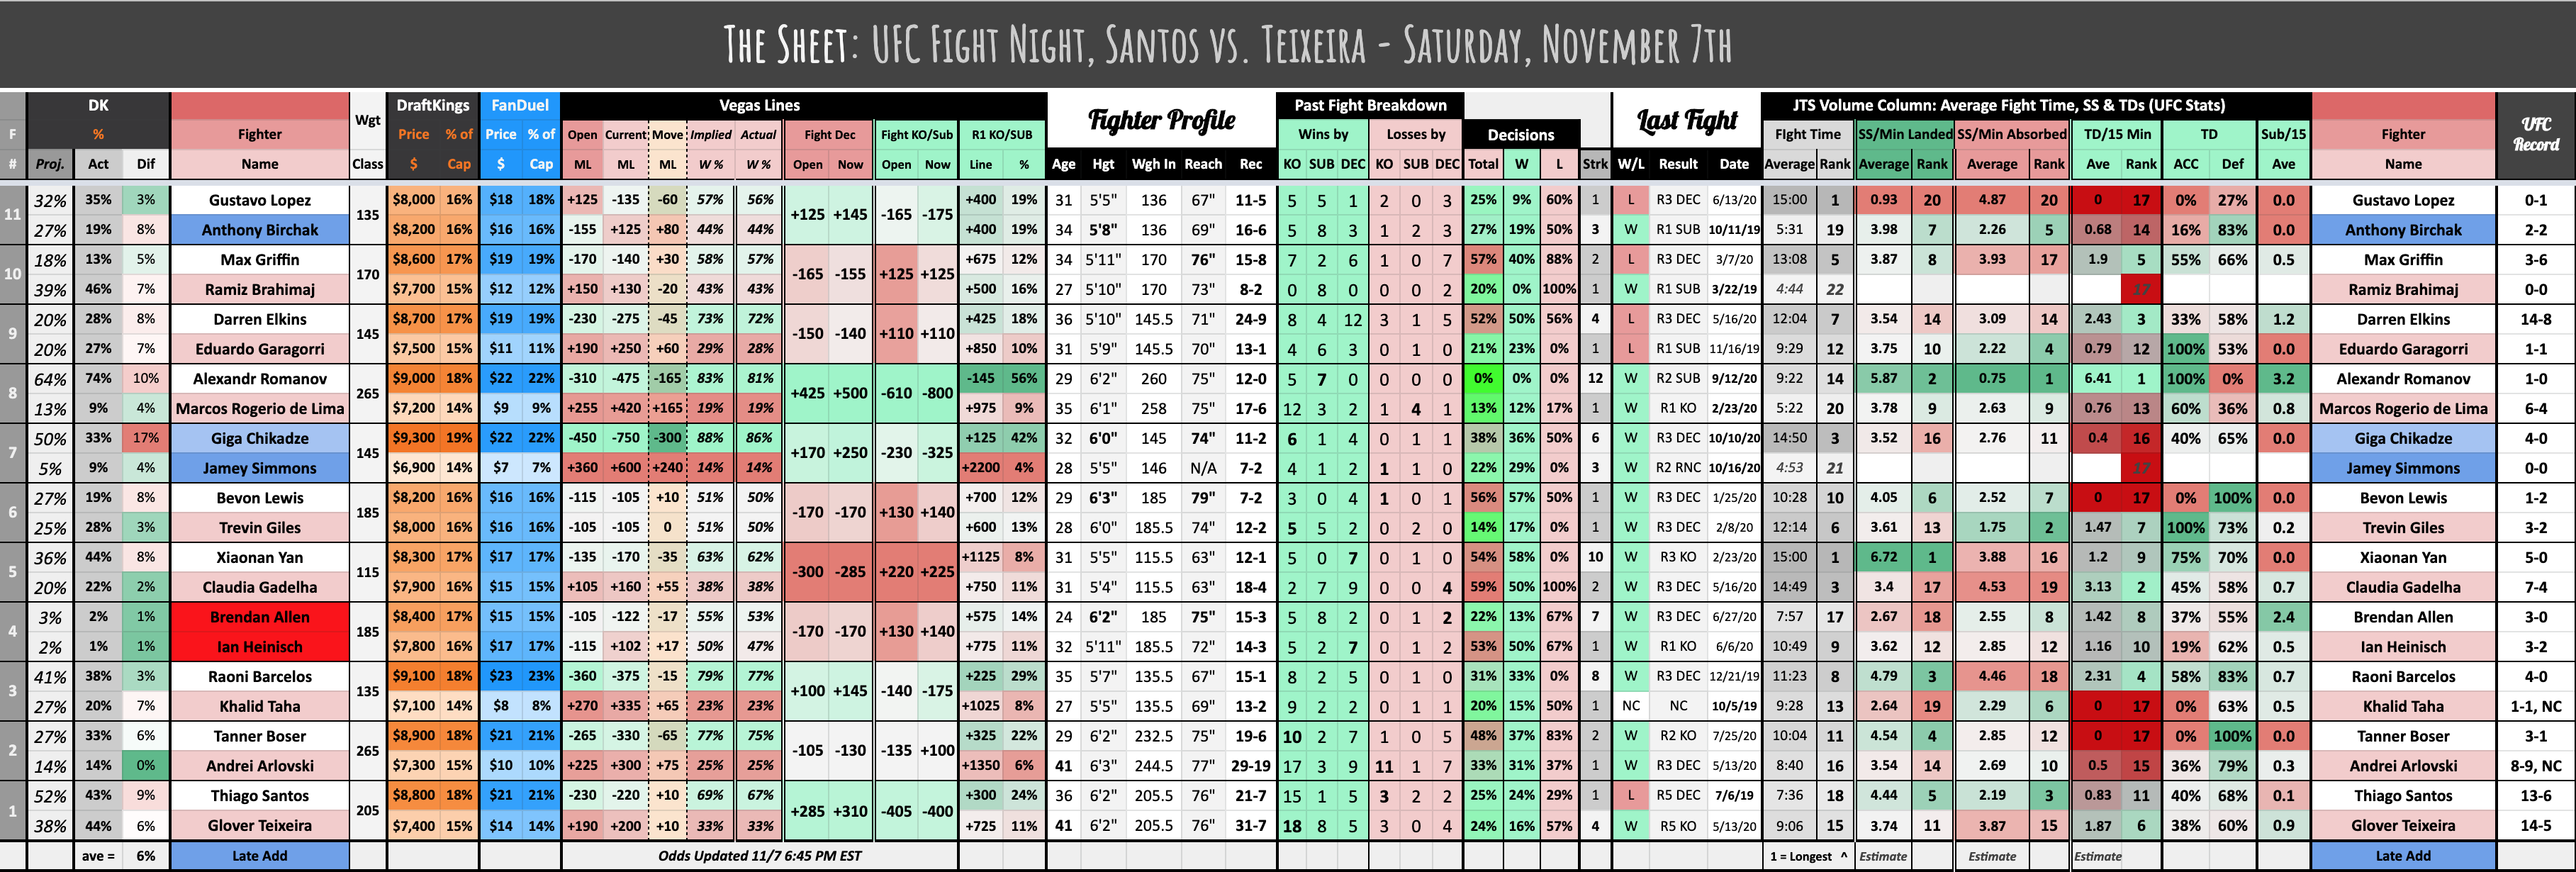 The Sheet: UFC Fight Night, Santos vs. Teixeira - Saturday, November 7th